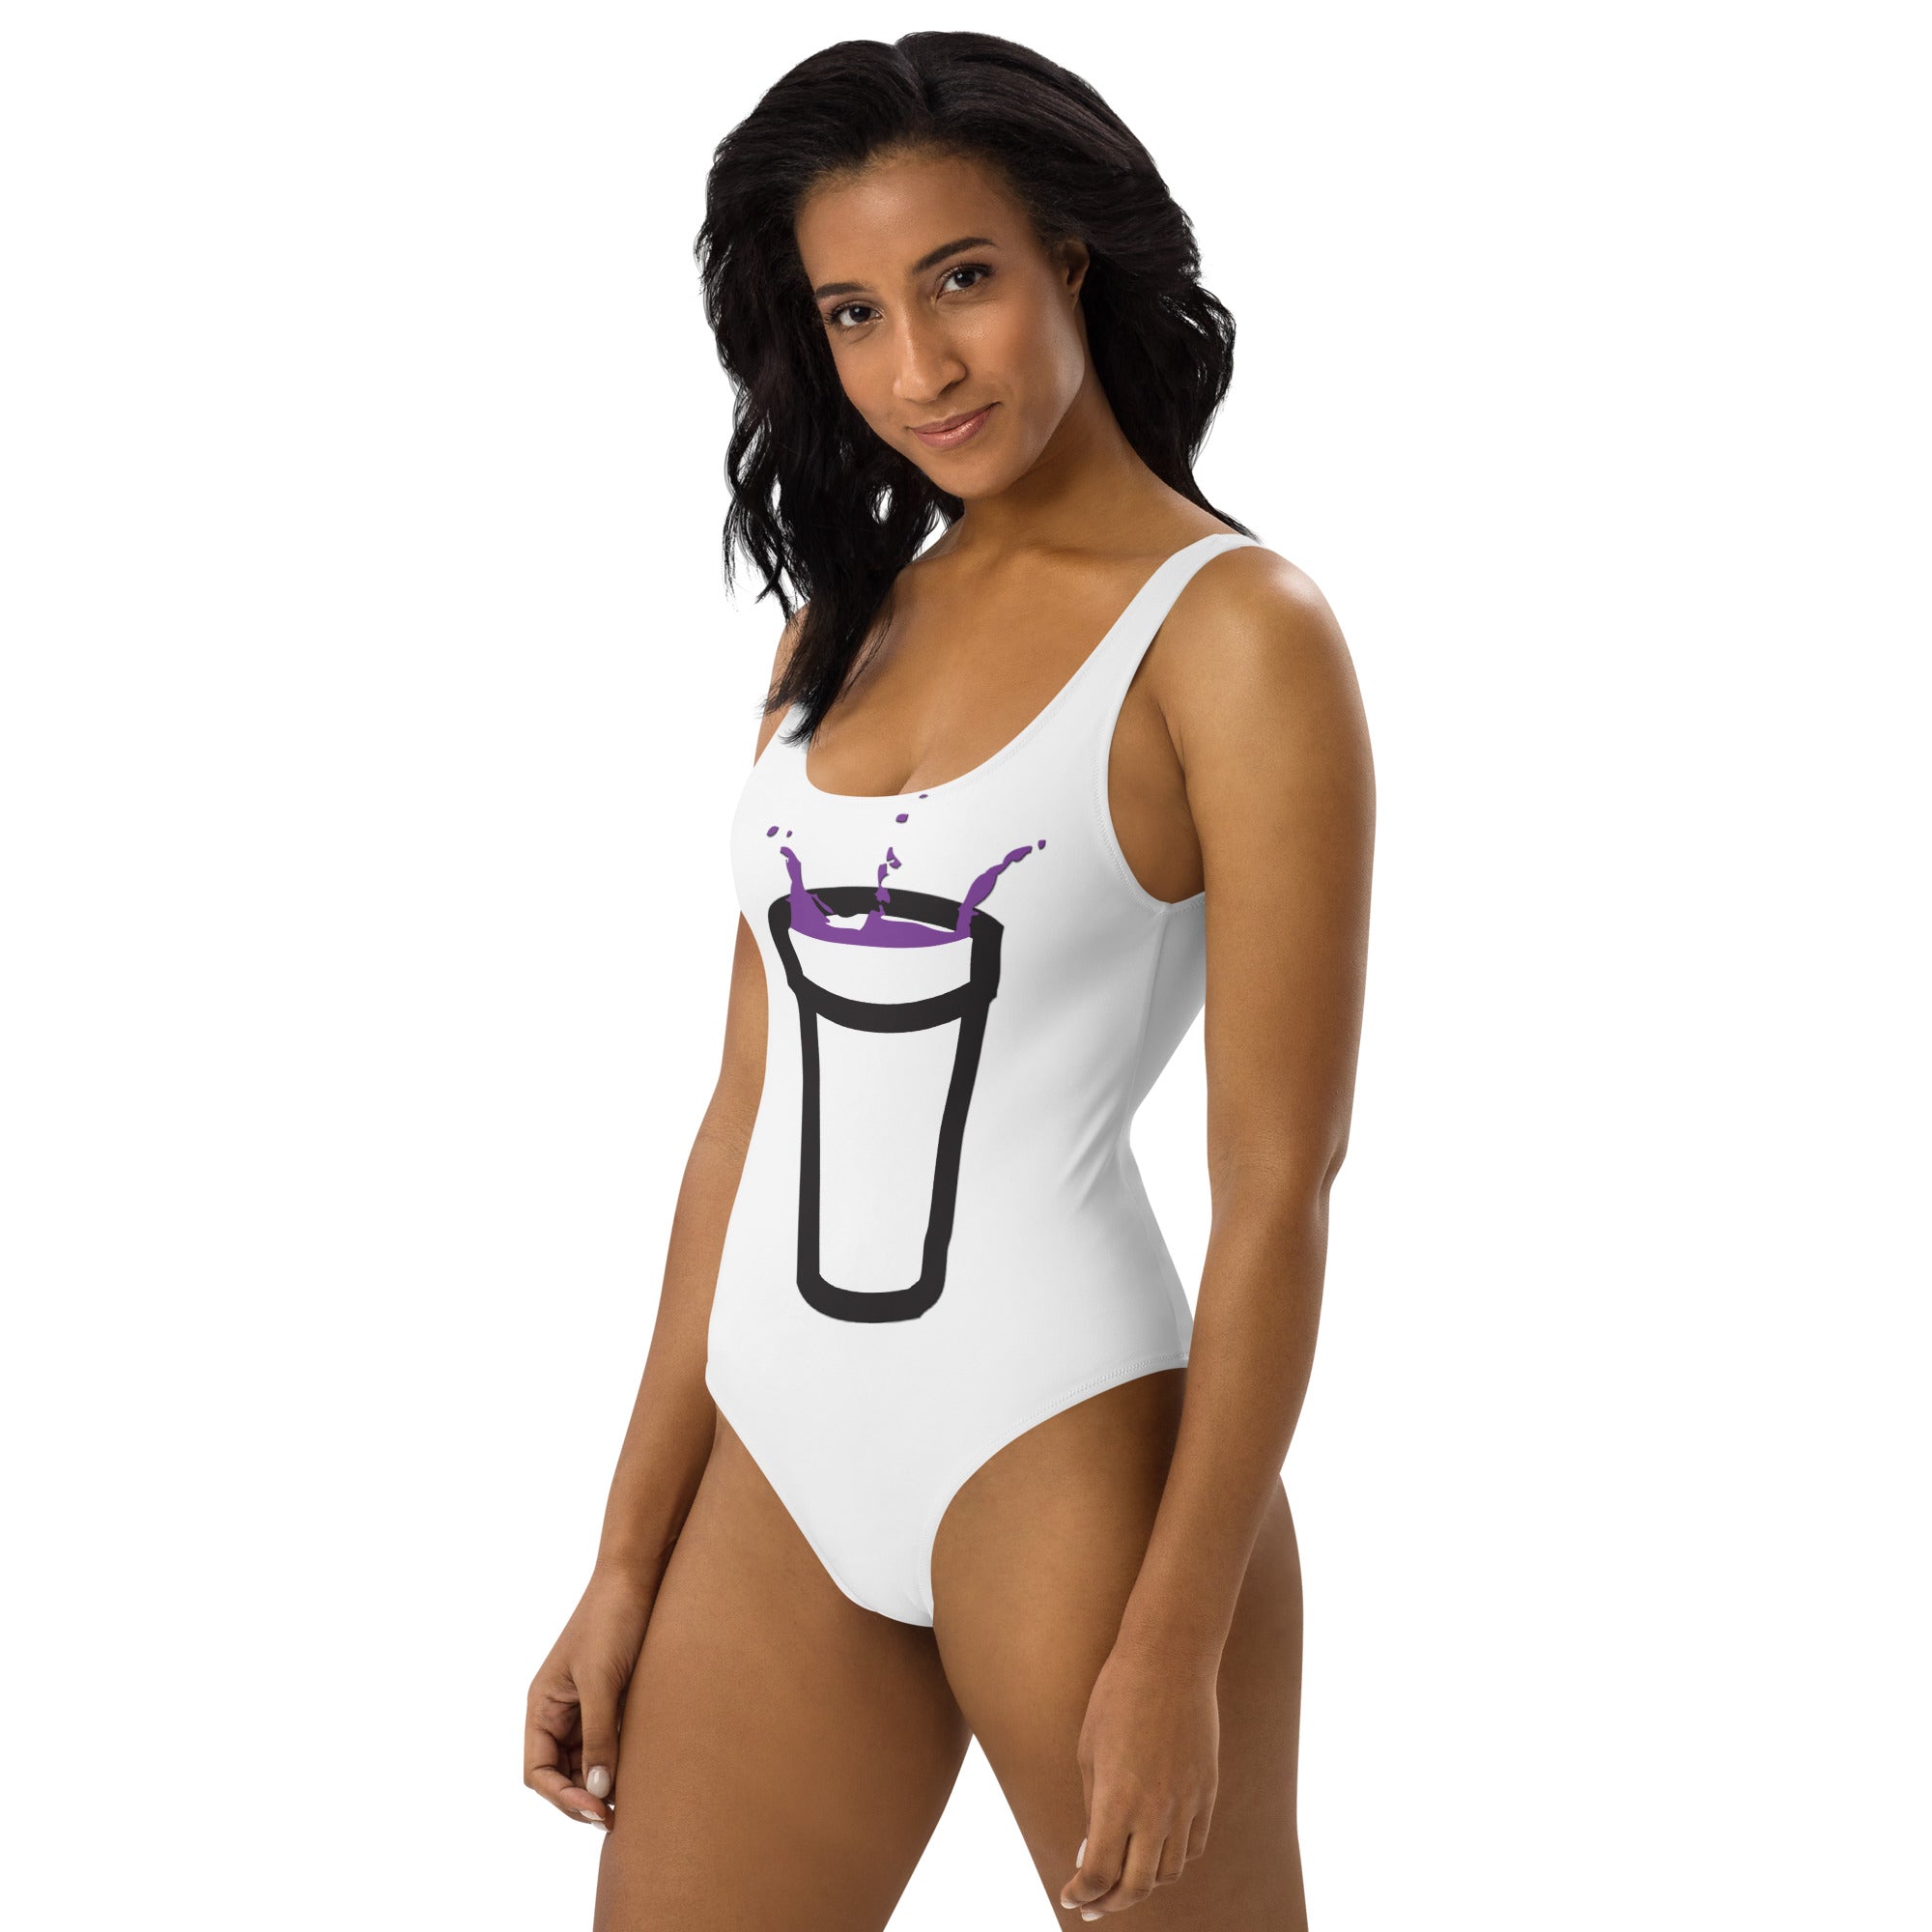 Dozzze Splashing Cup Swim Suit